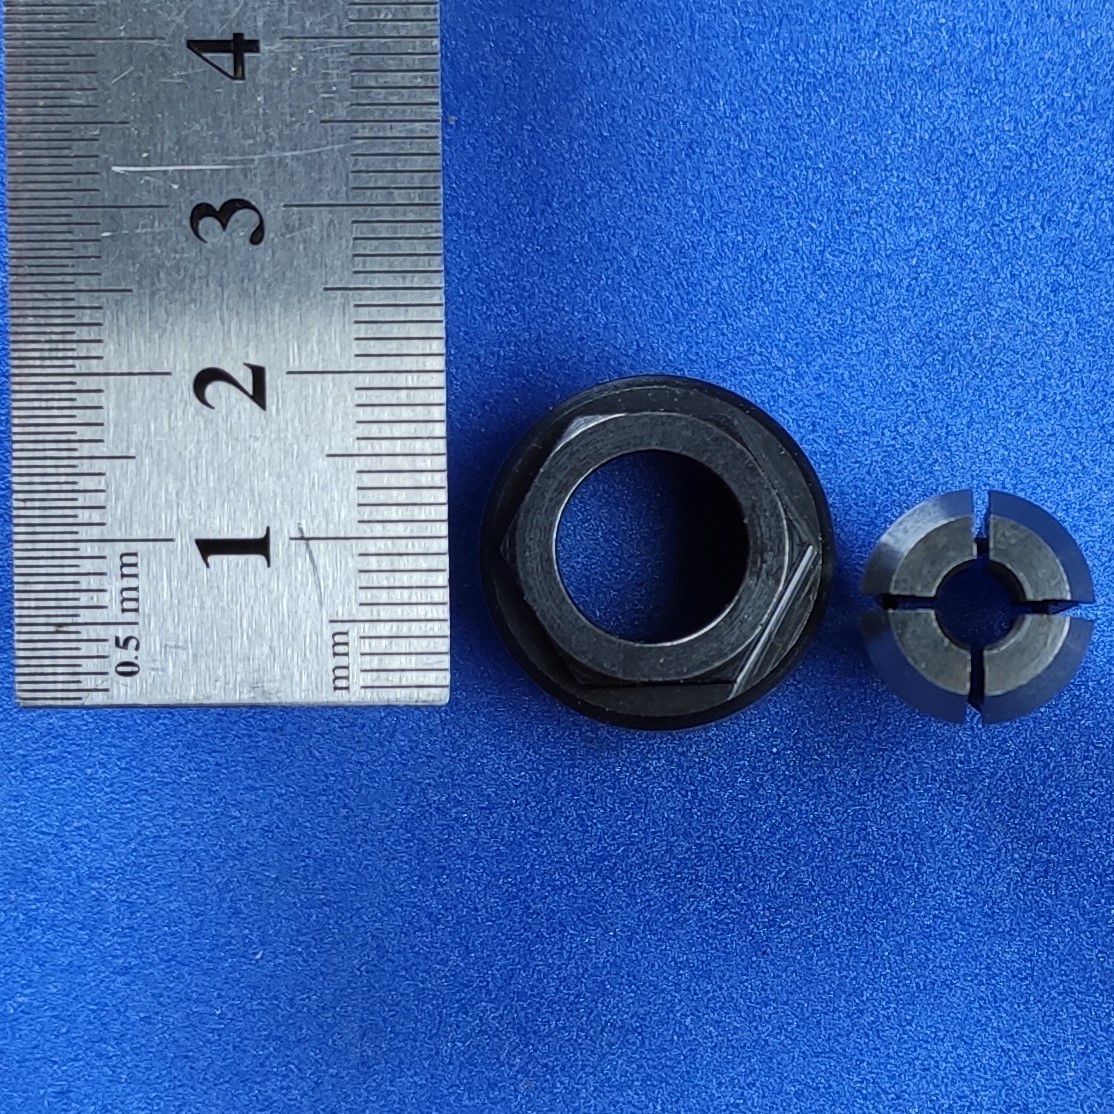 500mm amb kress collet clamping nut de 84661020